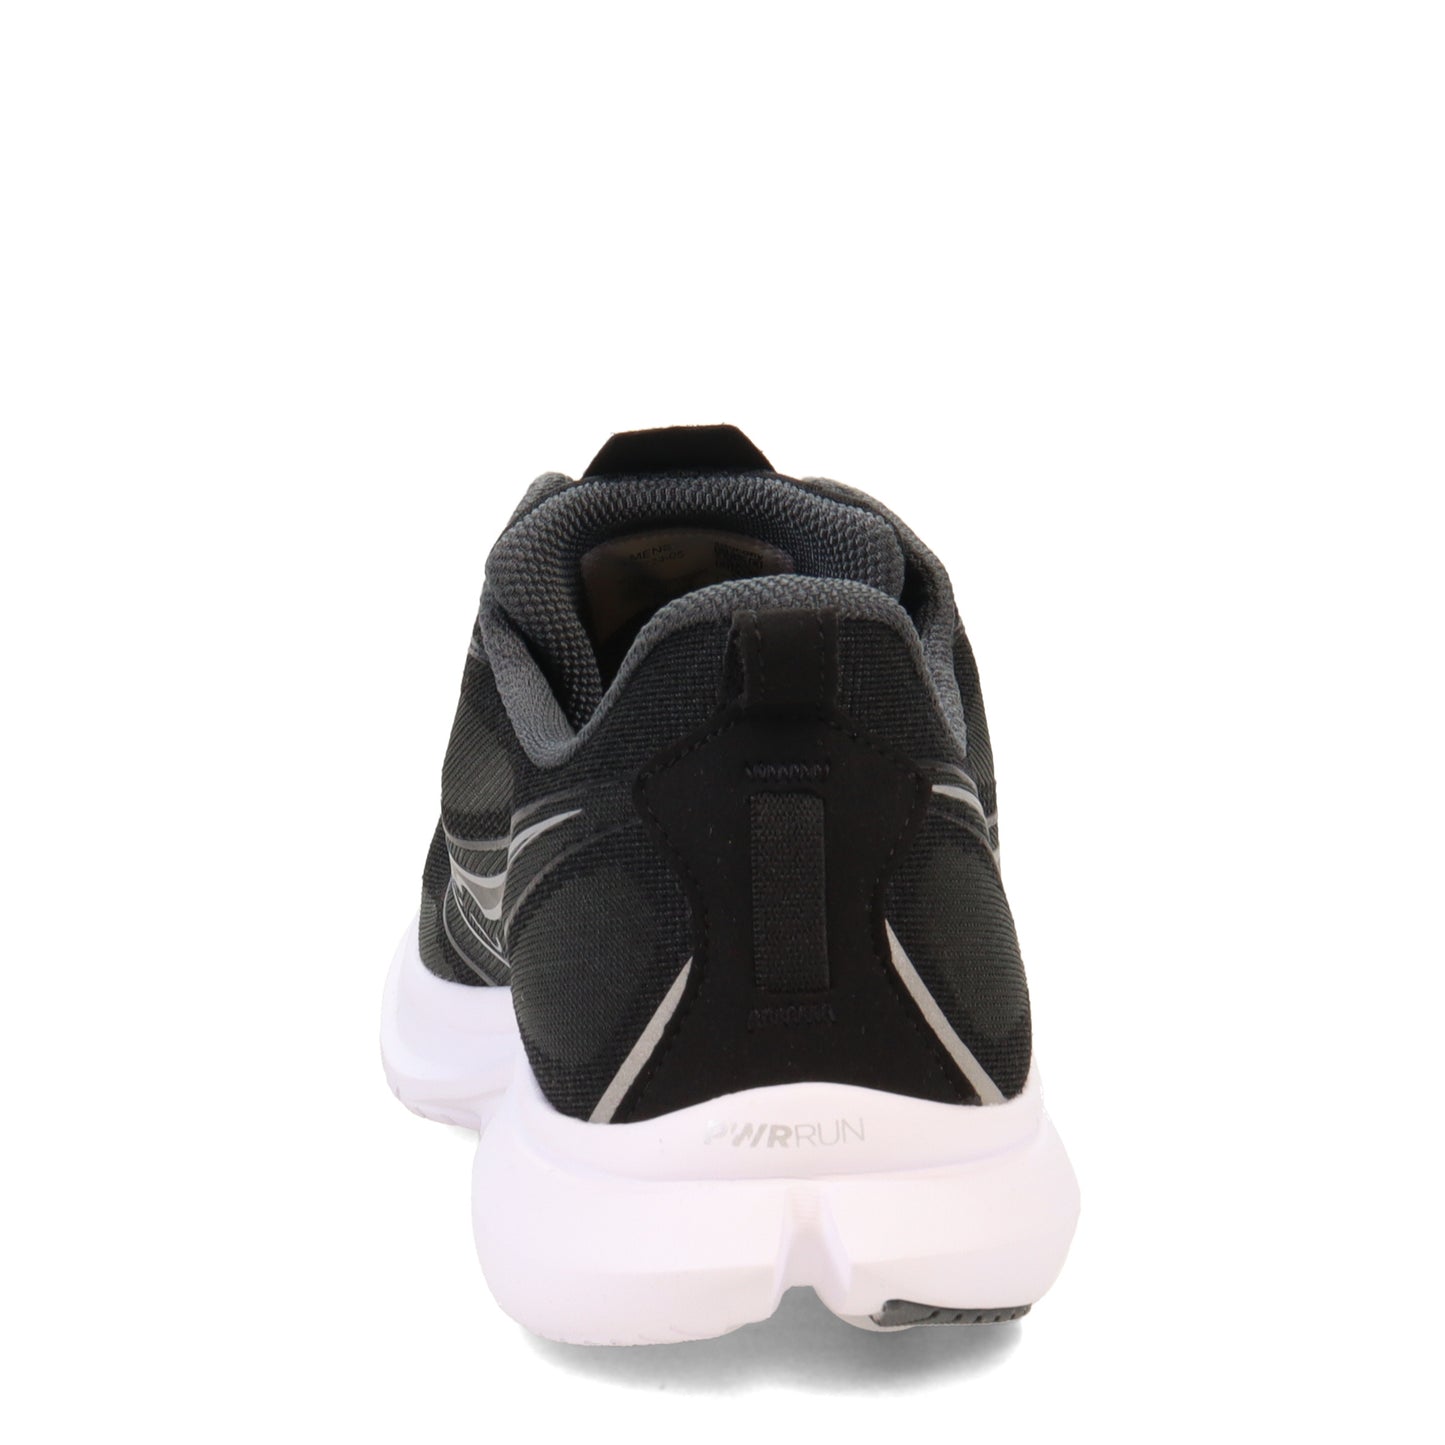 Peltz Shoes  Men's Saucony Kinvara 13 Running Shoe - Wide Width BLACK SILVER S20724-05